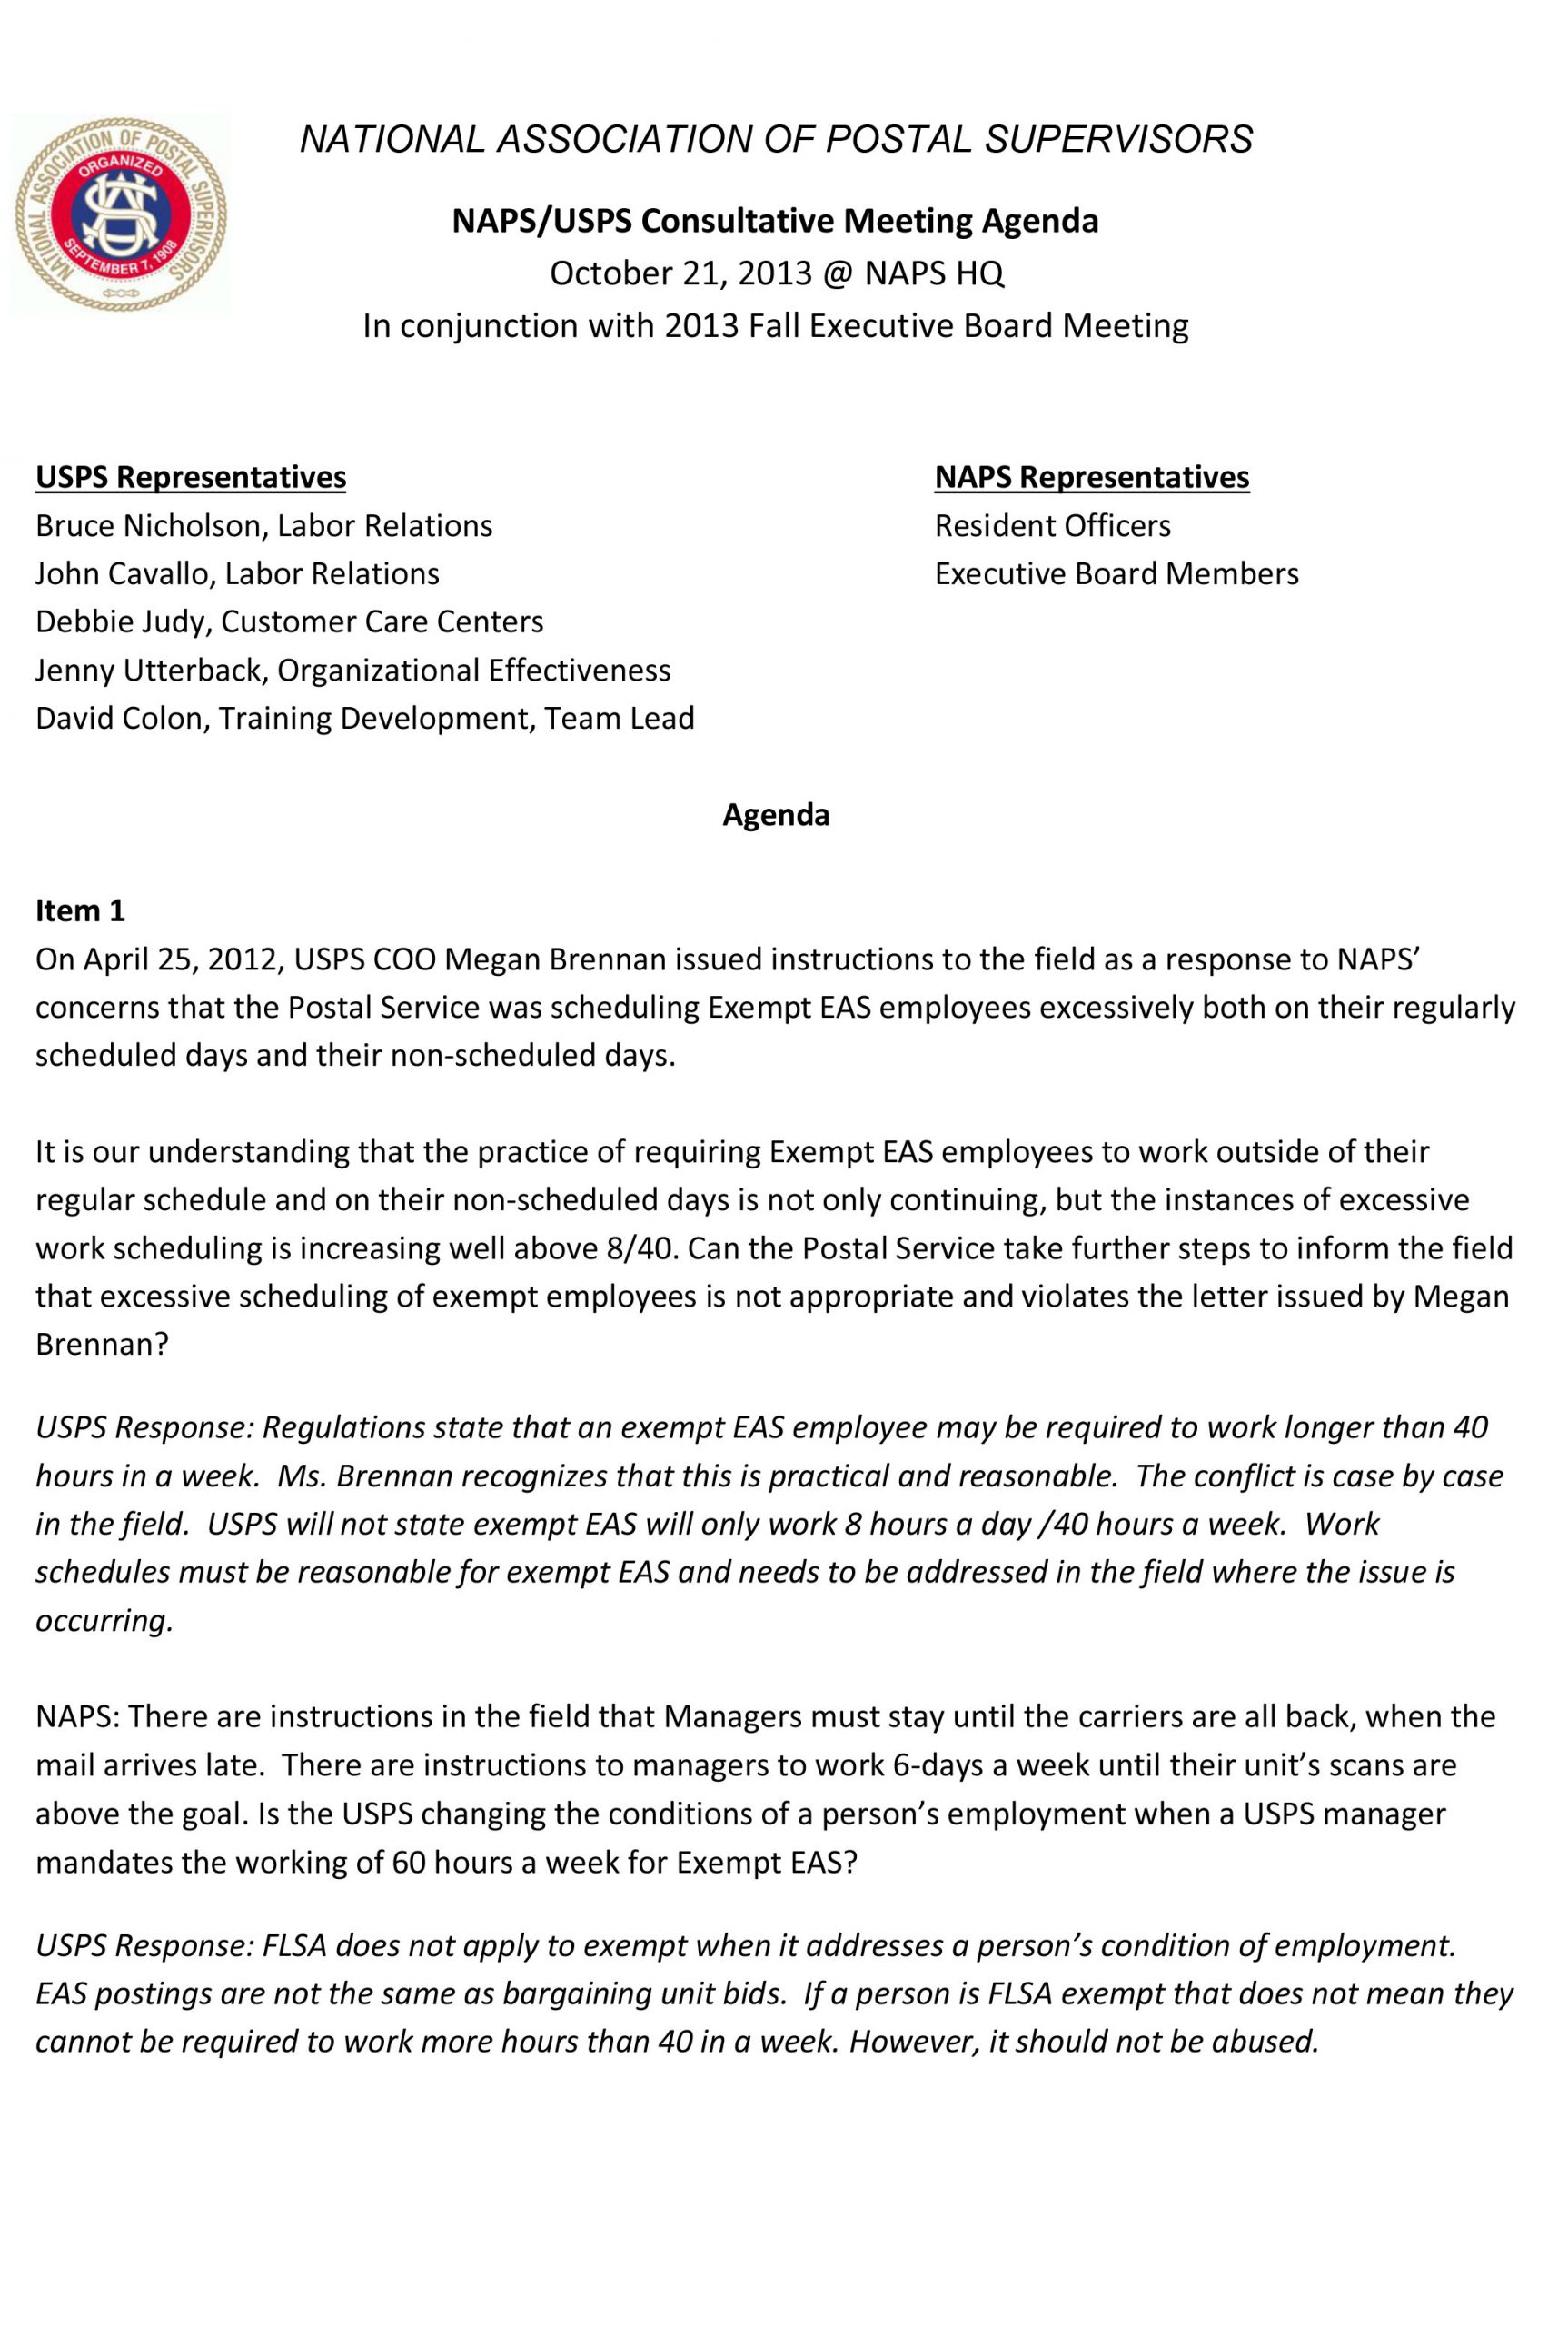 NAPS/USPS Consultative Meeting Agenda – October 21, 2013